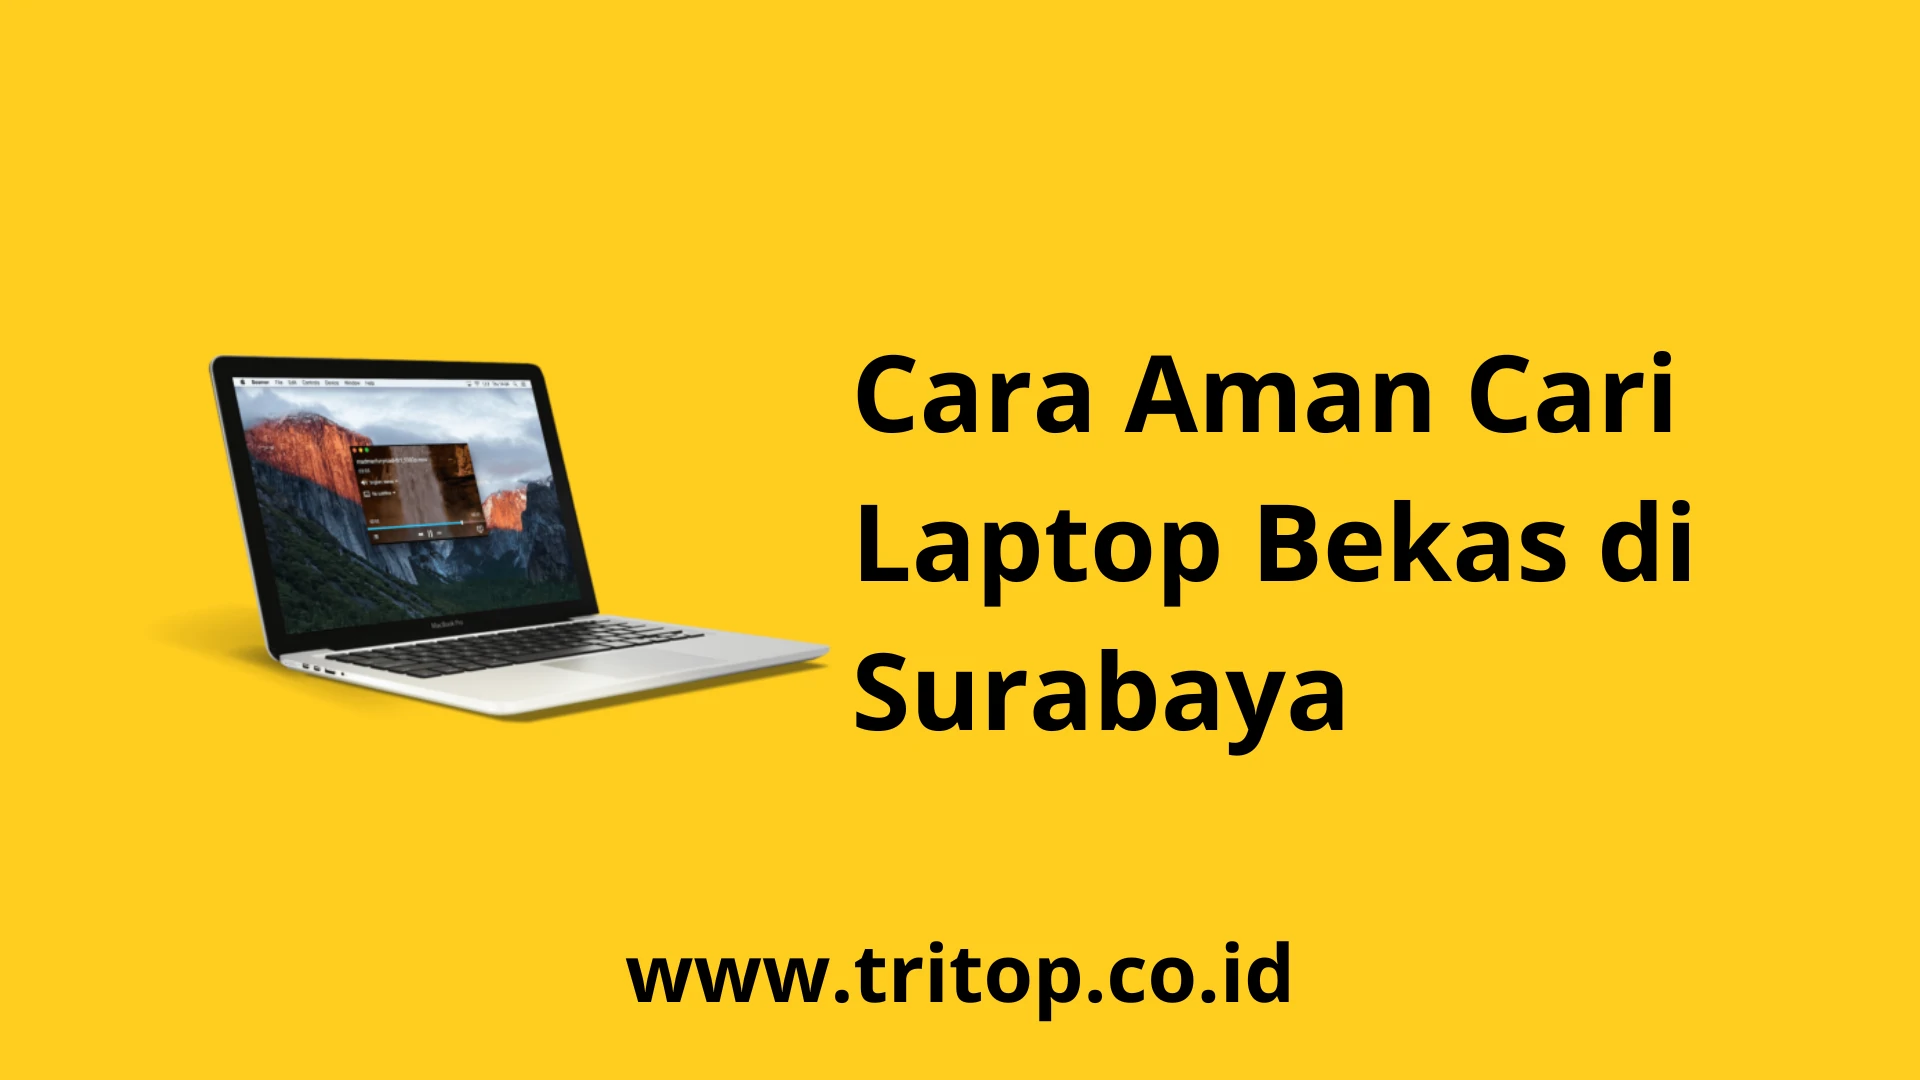 Cari Laptop Bekas Surabaya www.tritop.co.id